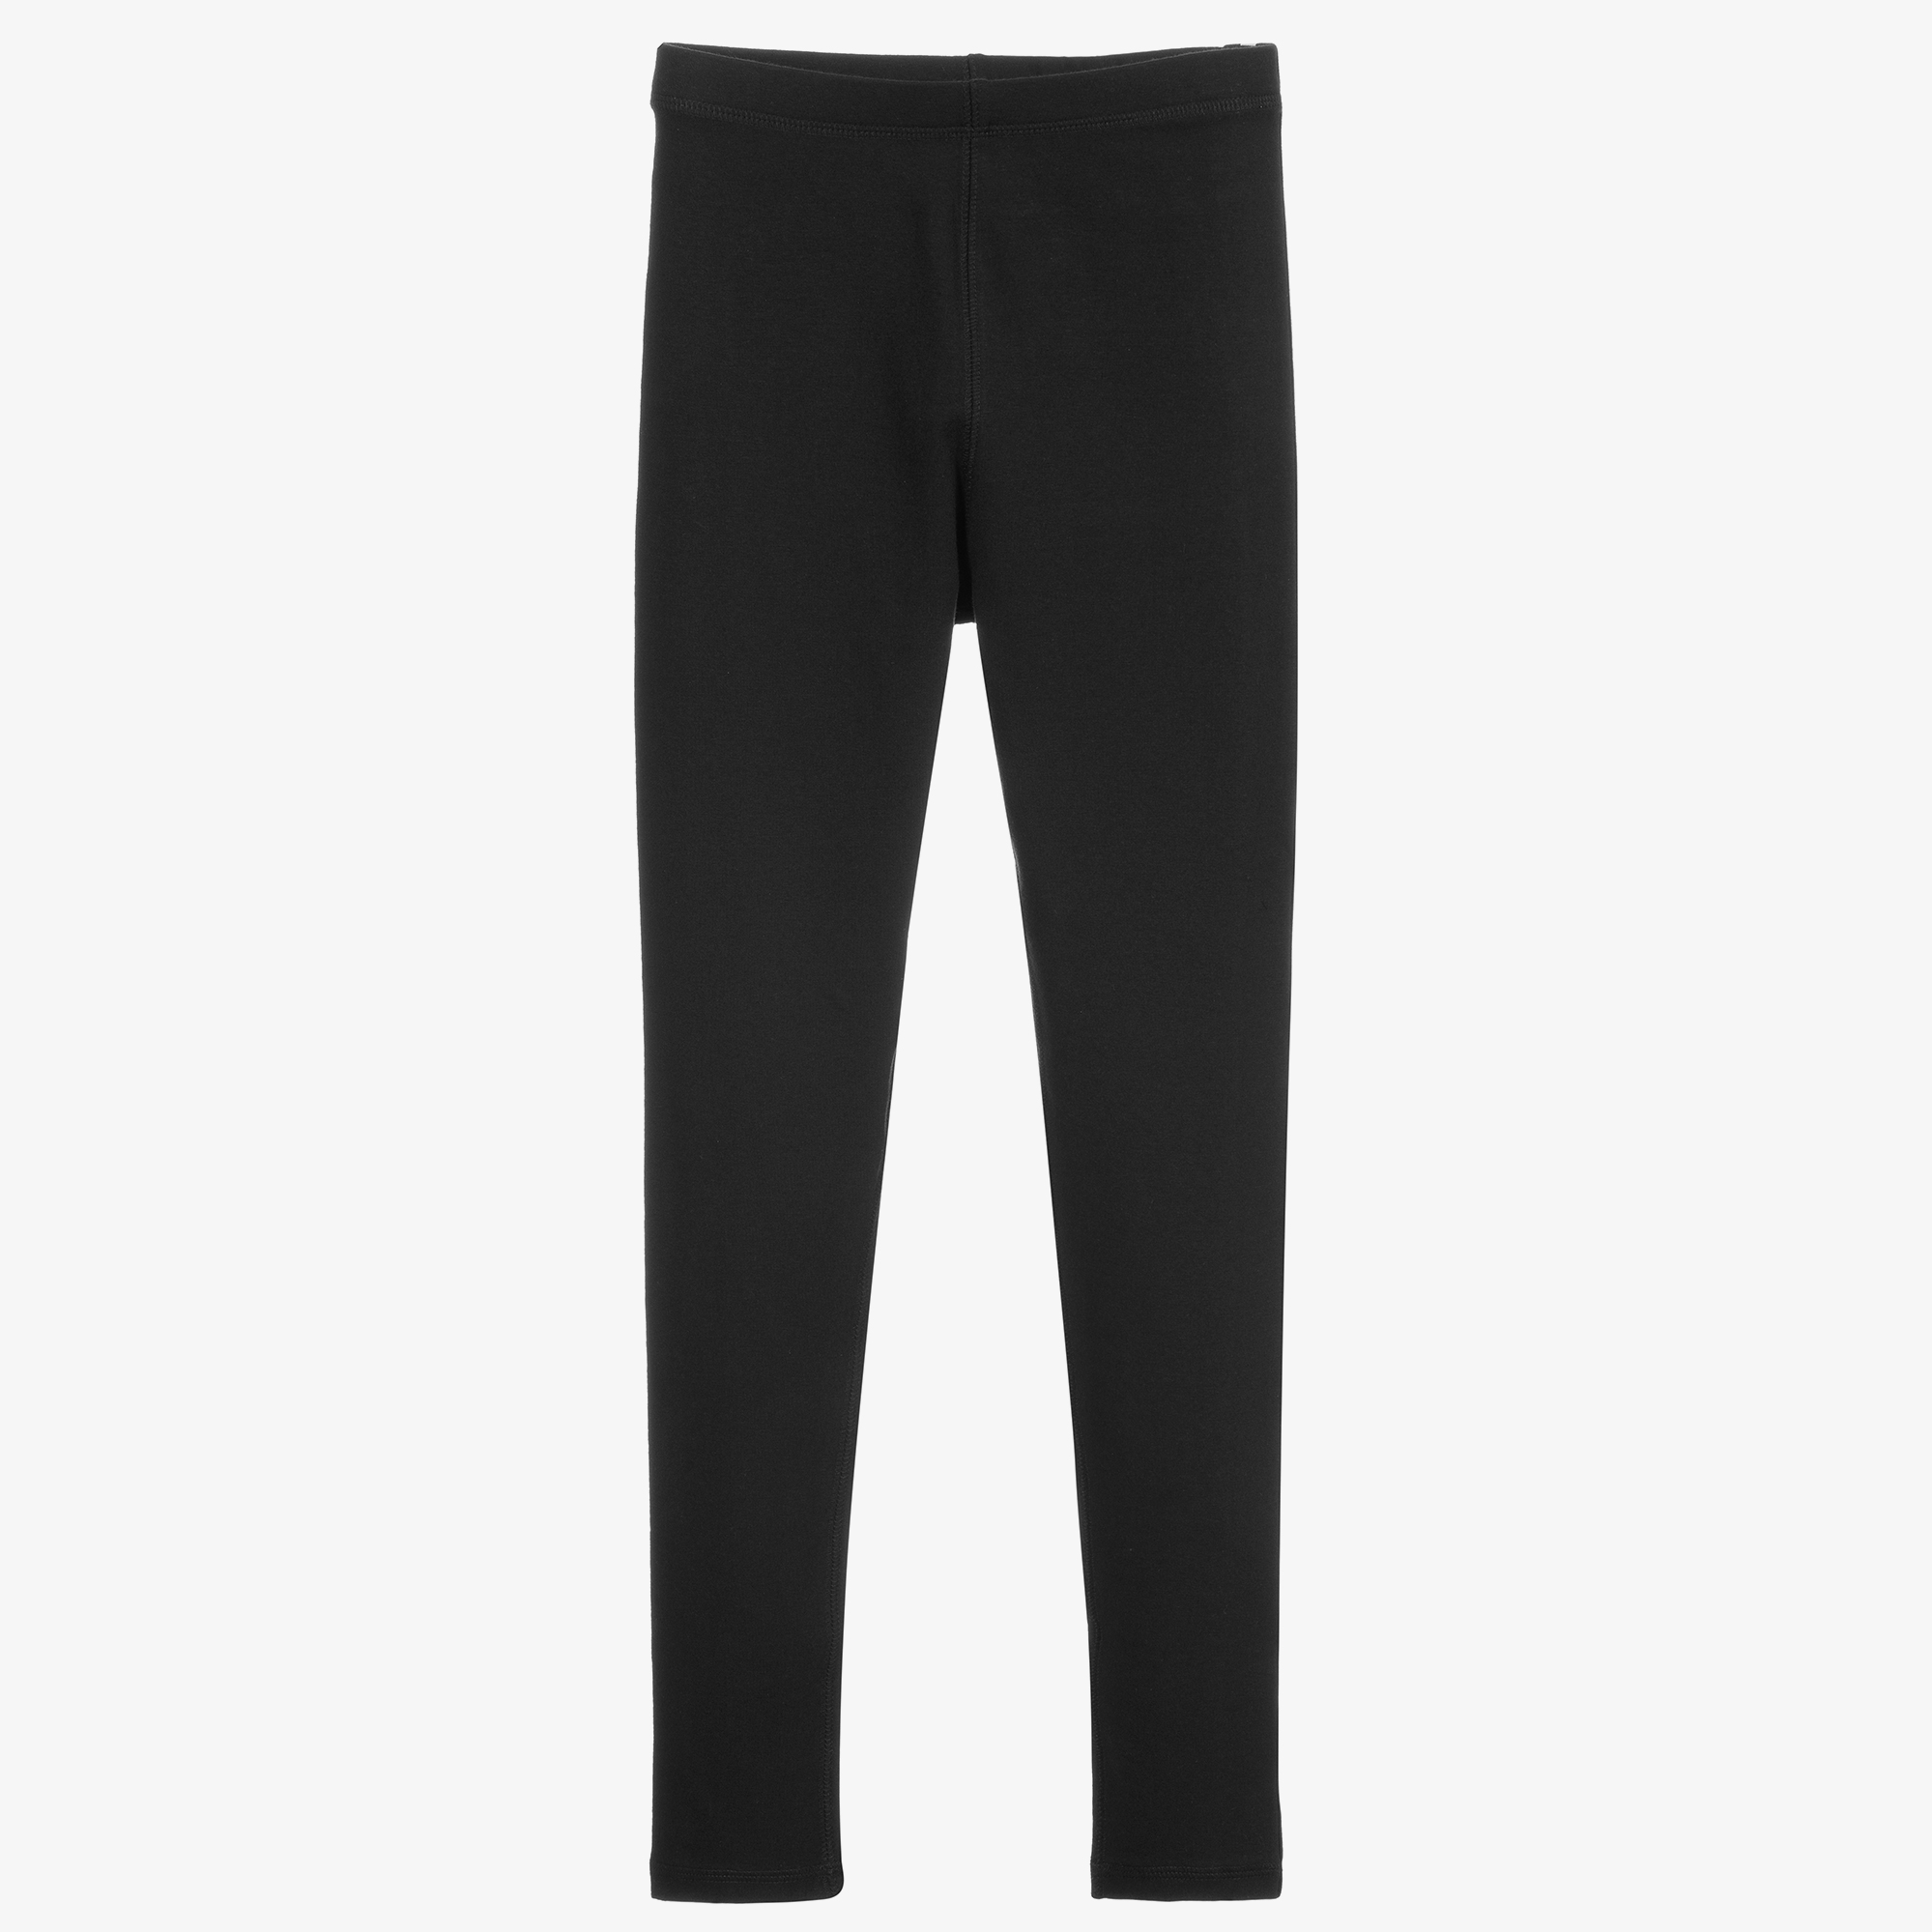 Burberry Ladies Black Zip Detail Jodhpur Leggings, Brand Size 8 (US Size 6)  4566358 - Apparel - Jomashop